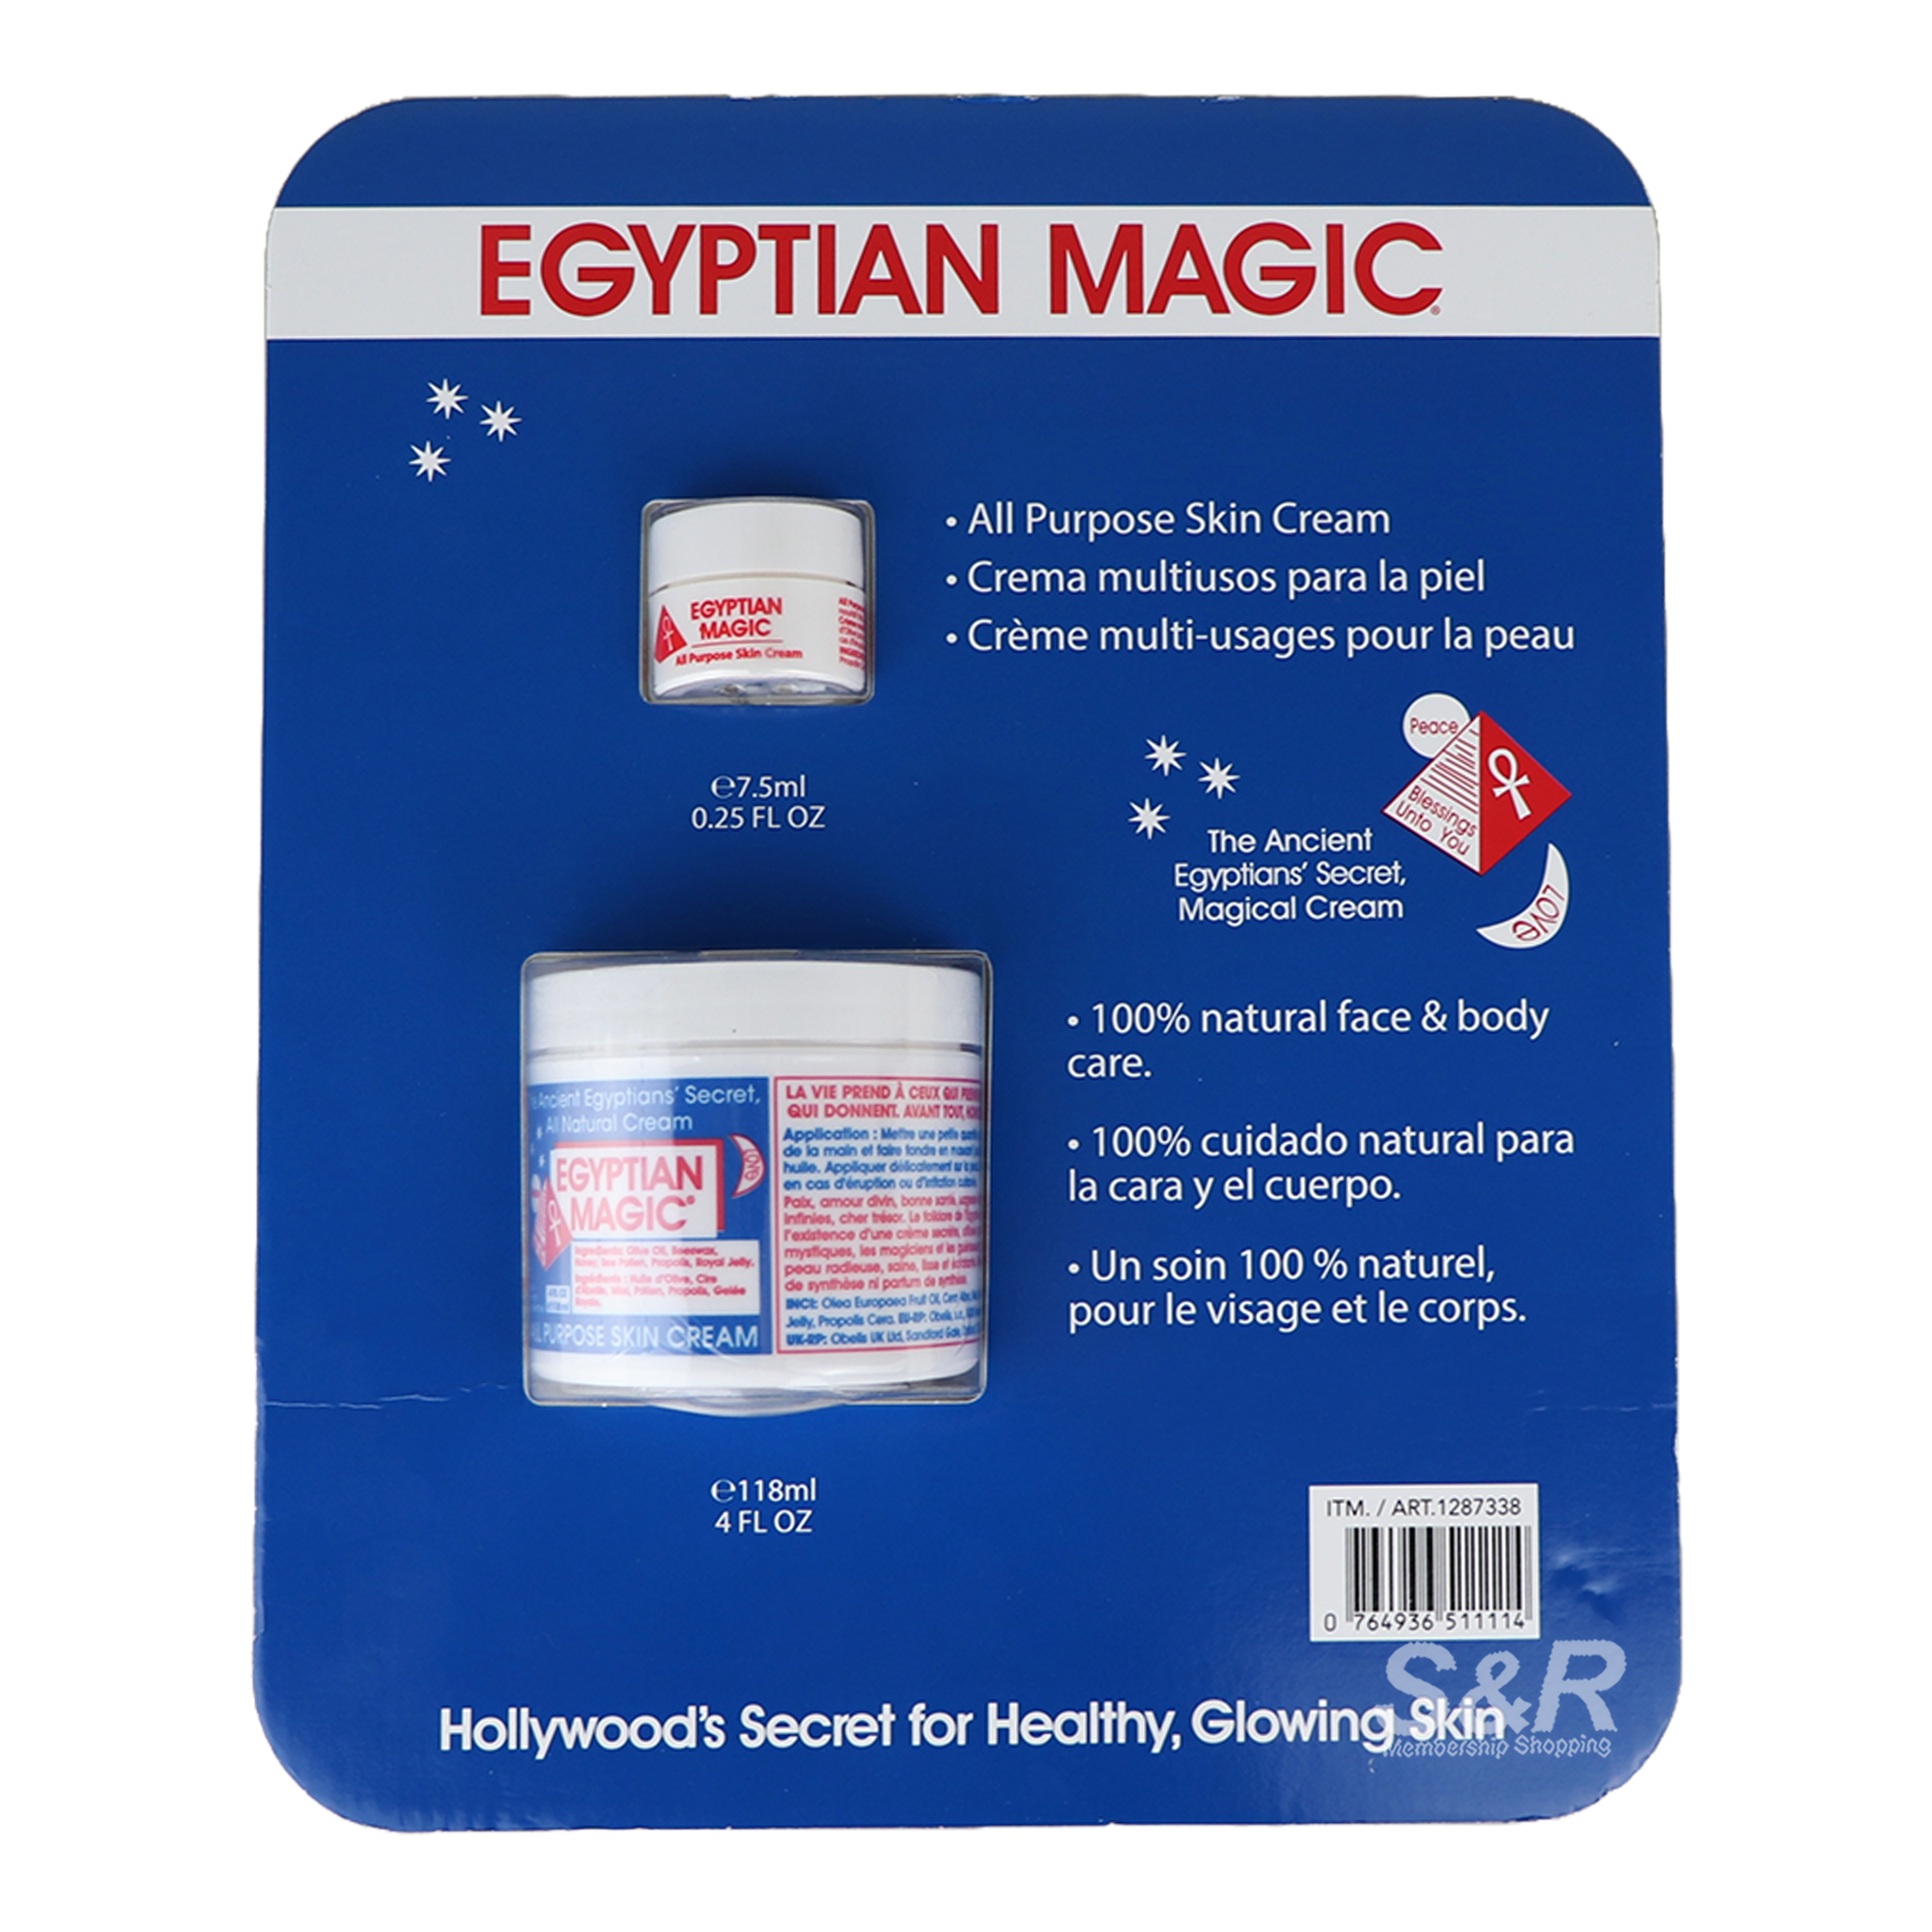 Egyptian Magic All Purpose Skin Cream 7.5mL 118mL